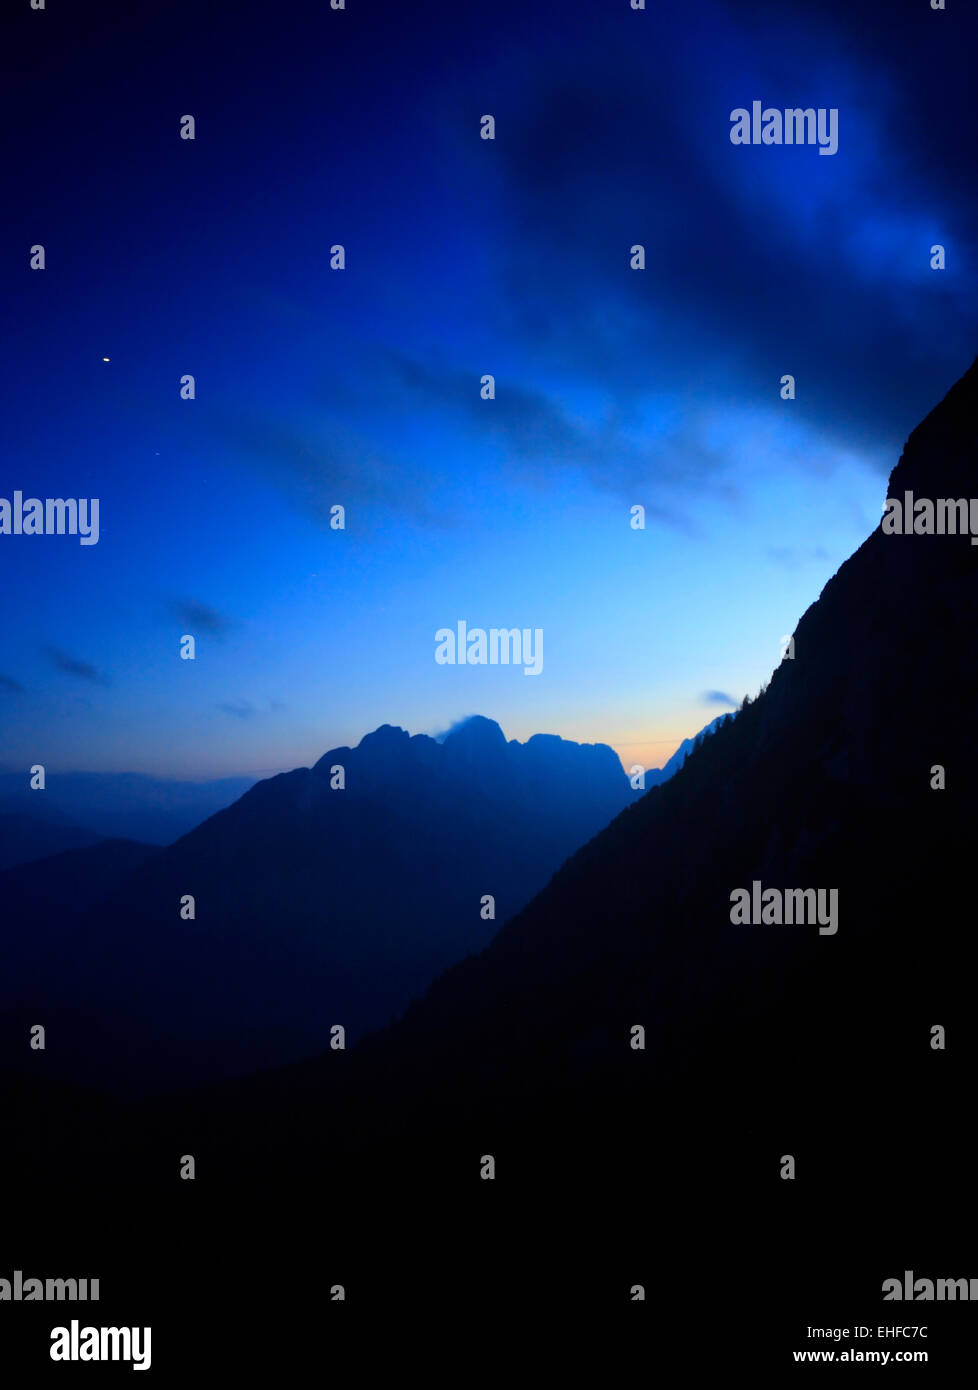 Mountains night, nature landscape. Slovenia, Europe. Stock Photo